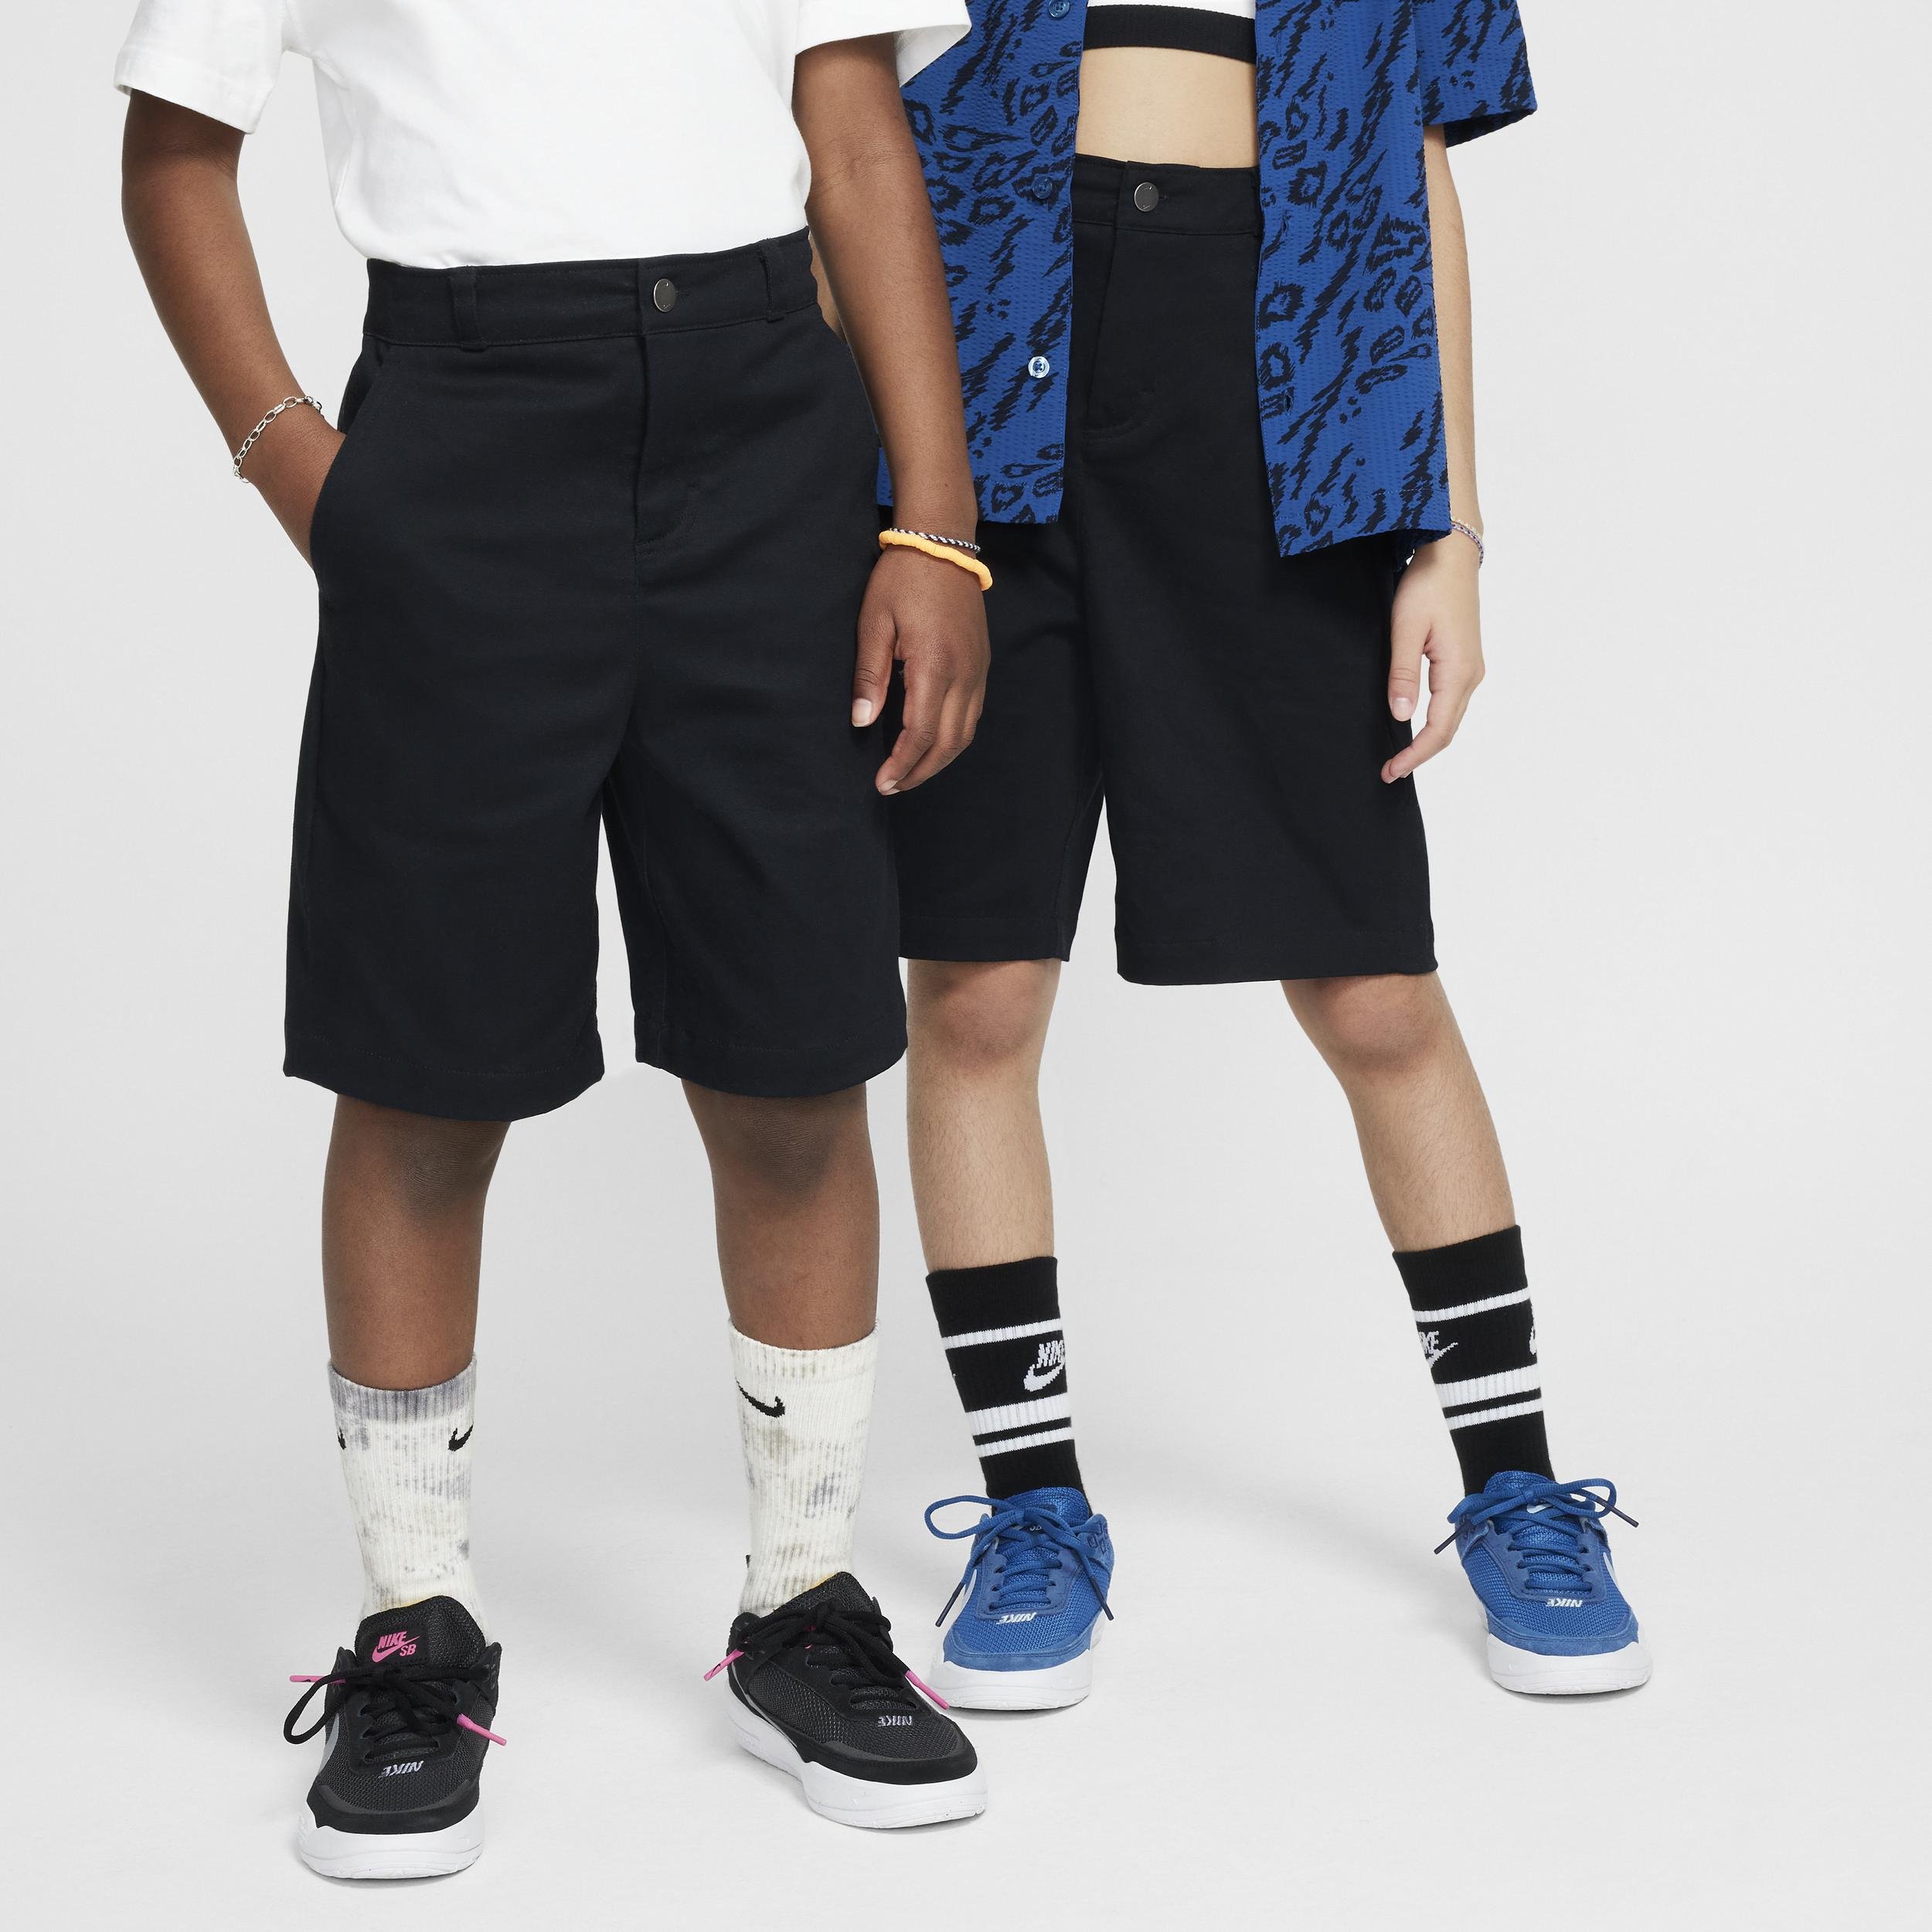 Nike SB Big Kids' Chino Skate Shorts by NIKE